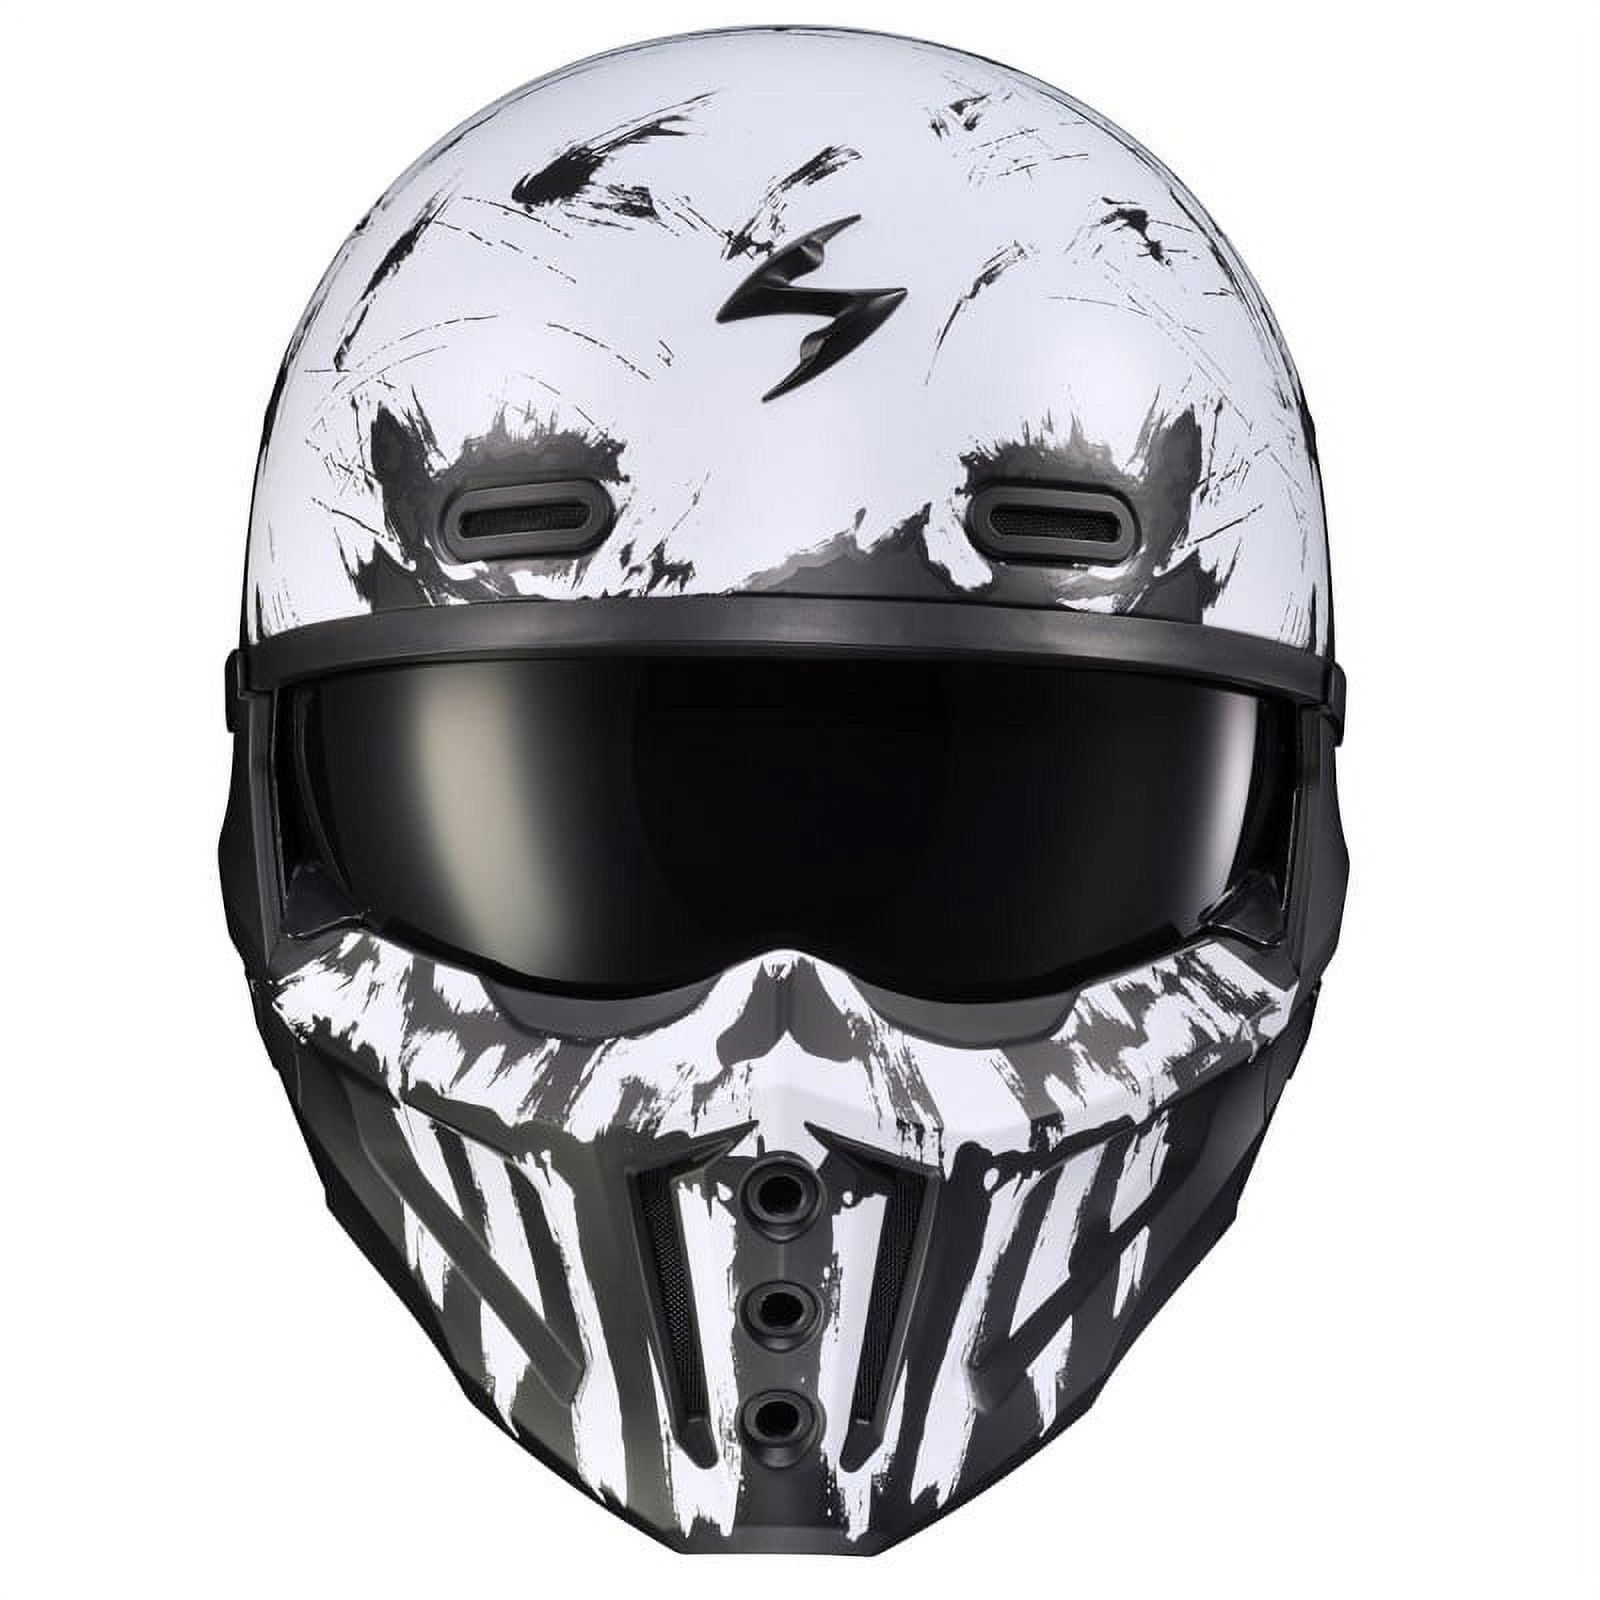 Scorpion Covert-X Marauder 3-in-1 Helmet - Black - Walmart.com